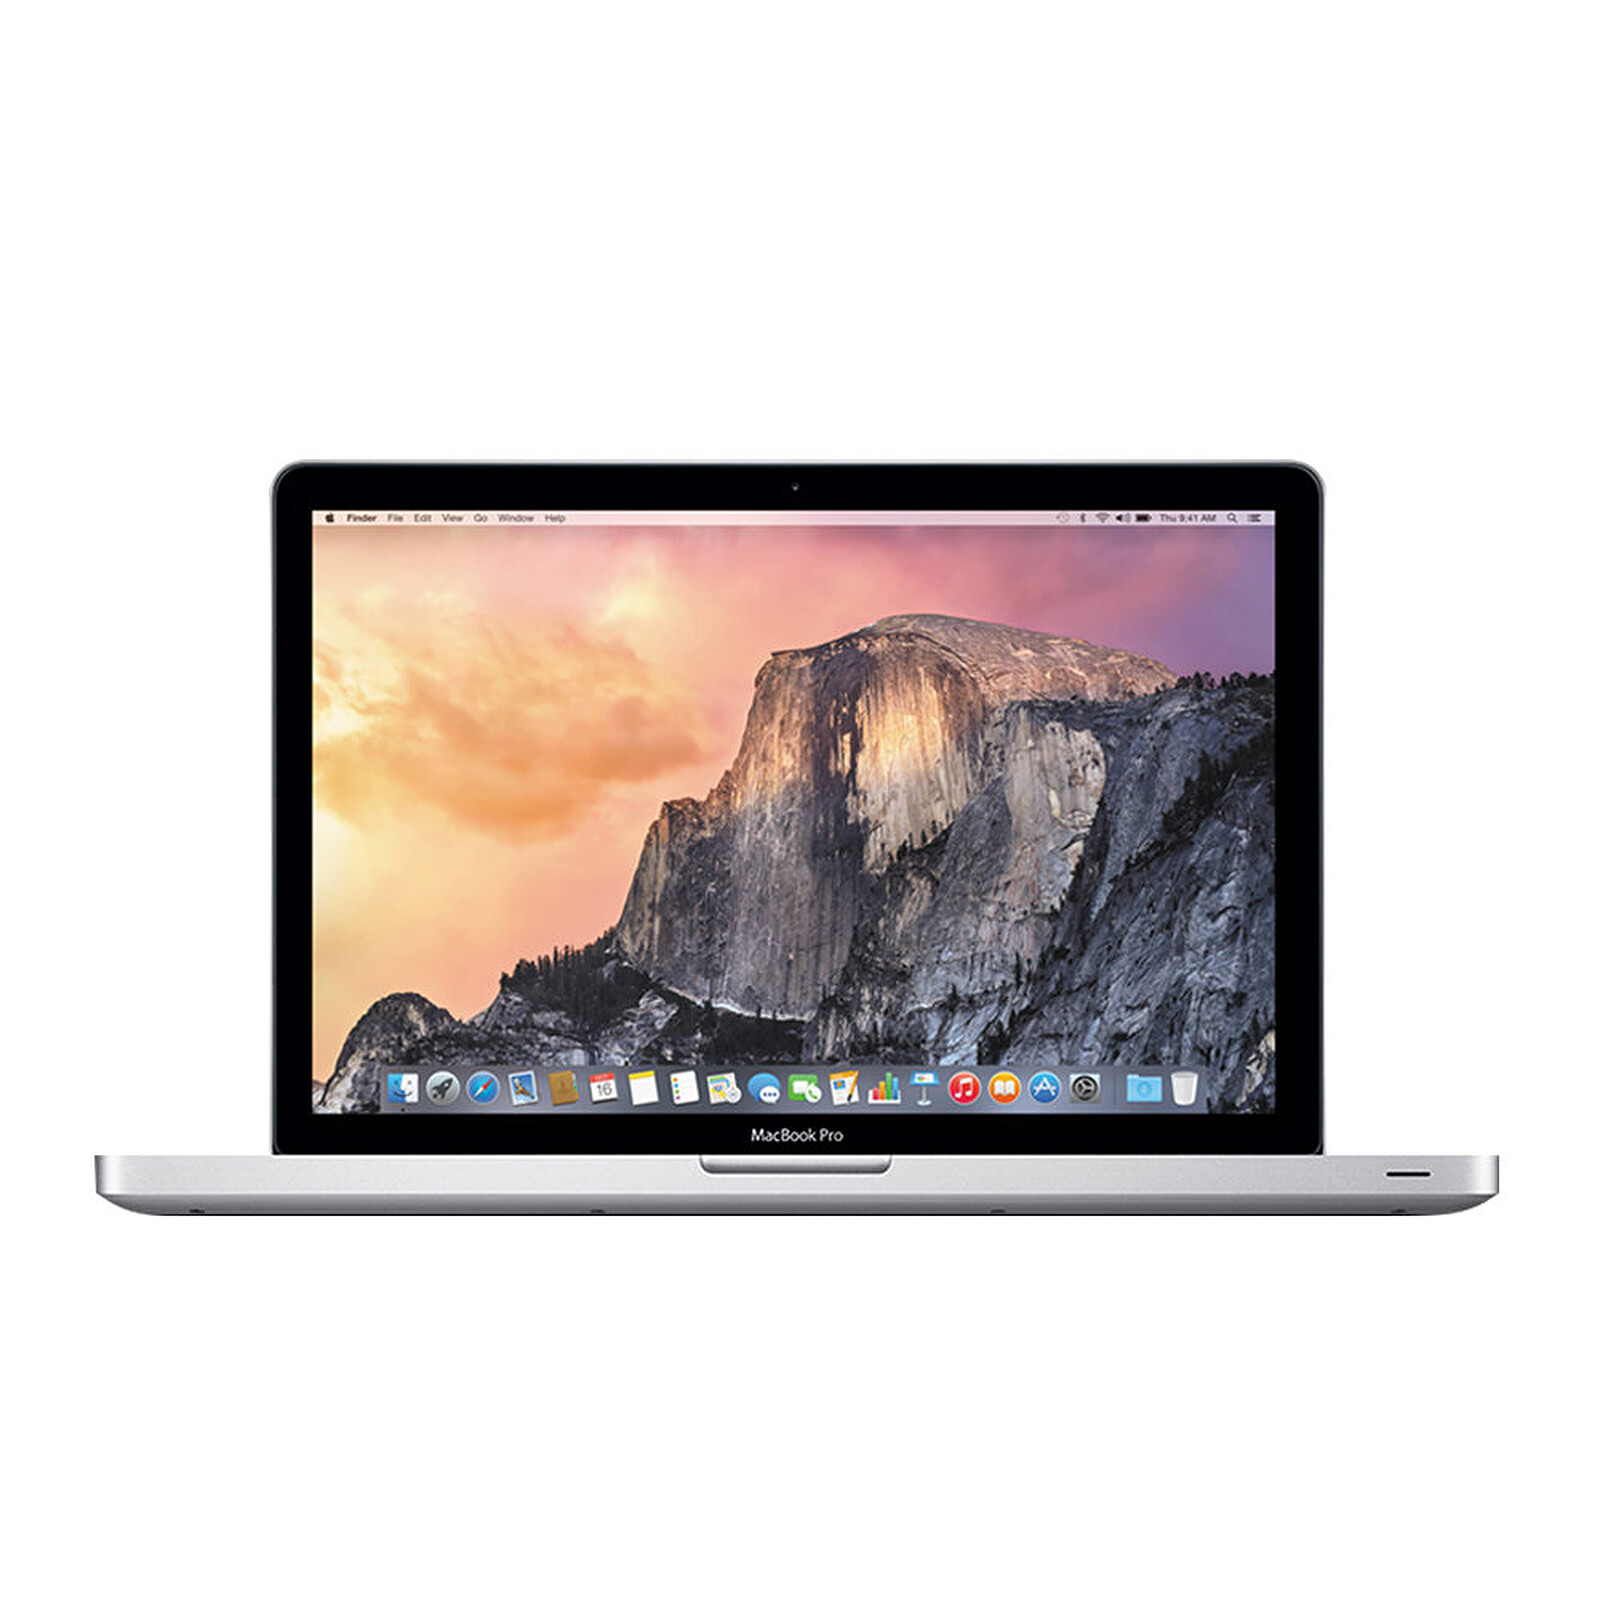 Apple MacBook Pro 15 - 2,5 Ghz - 16 Go RAM - 1 To HDD (2011